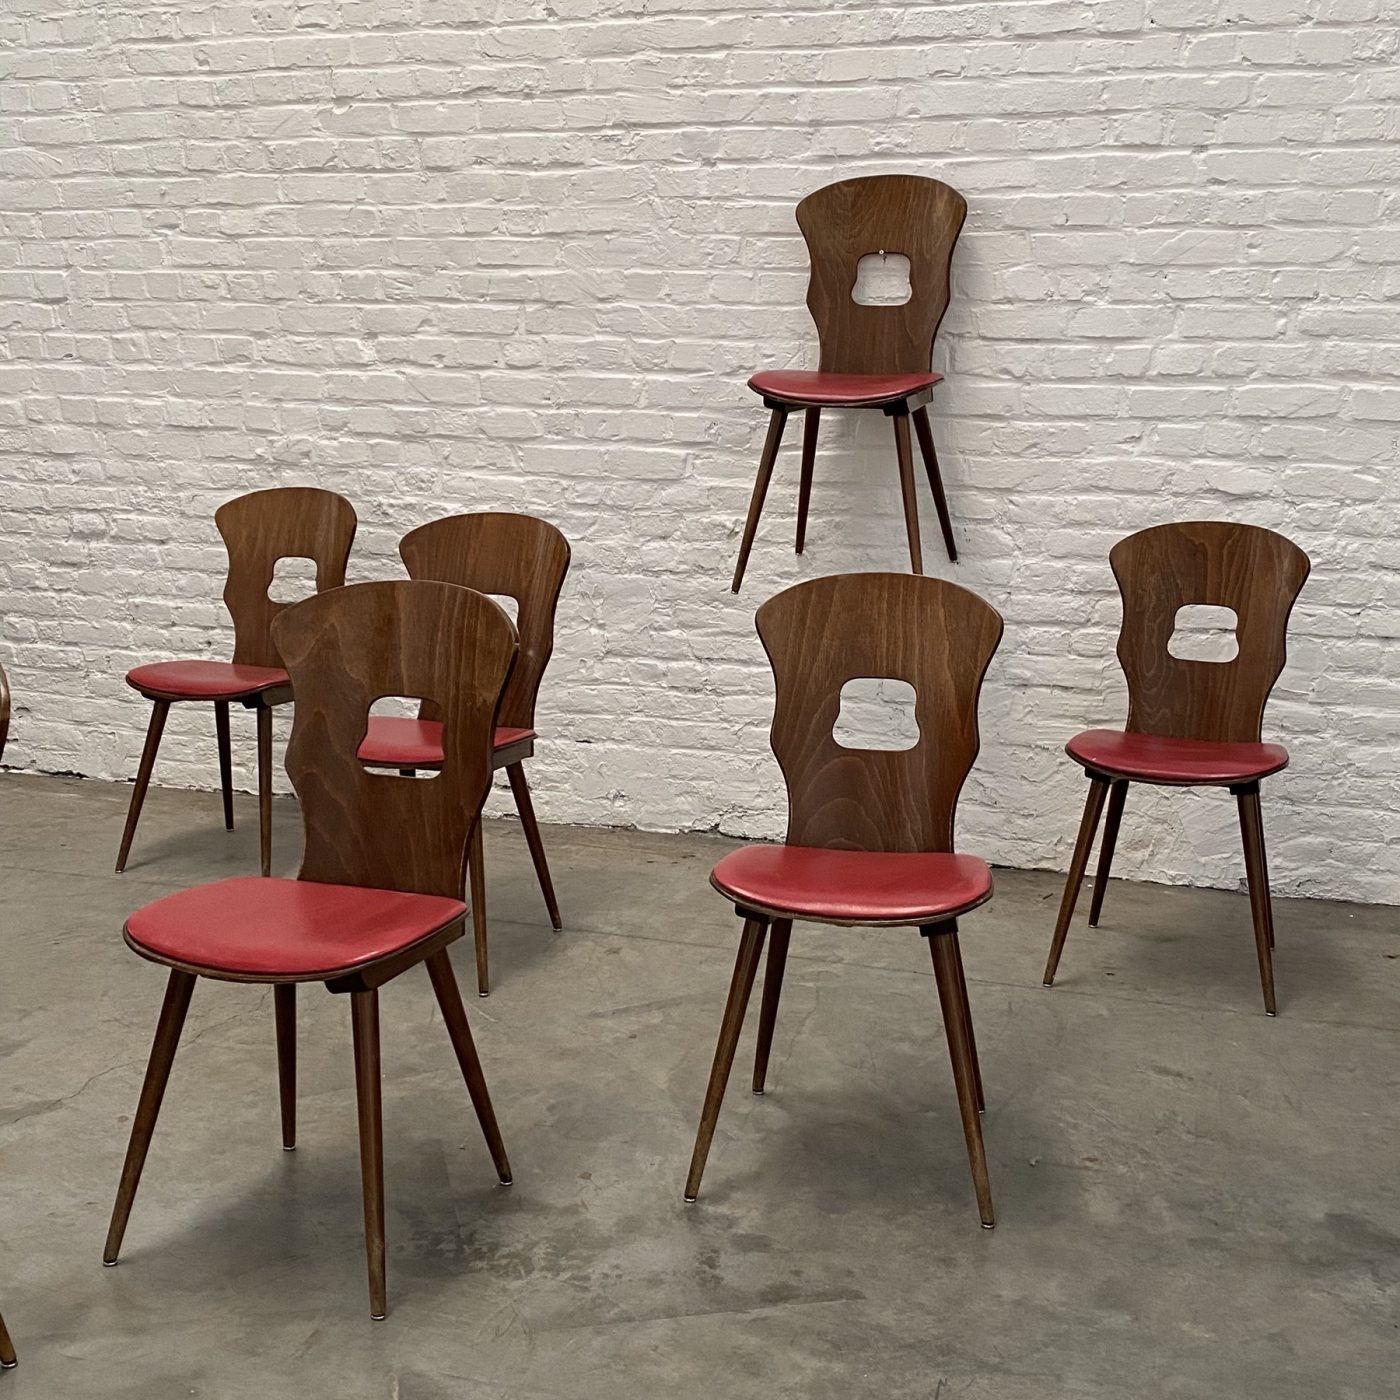 objet-vagabond-baumann-chairs0007